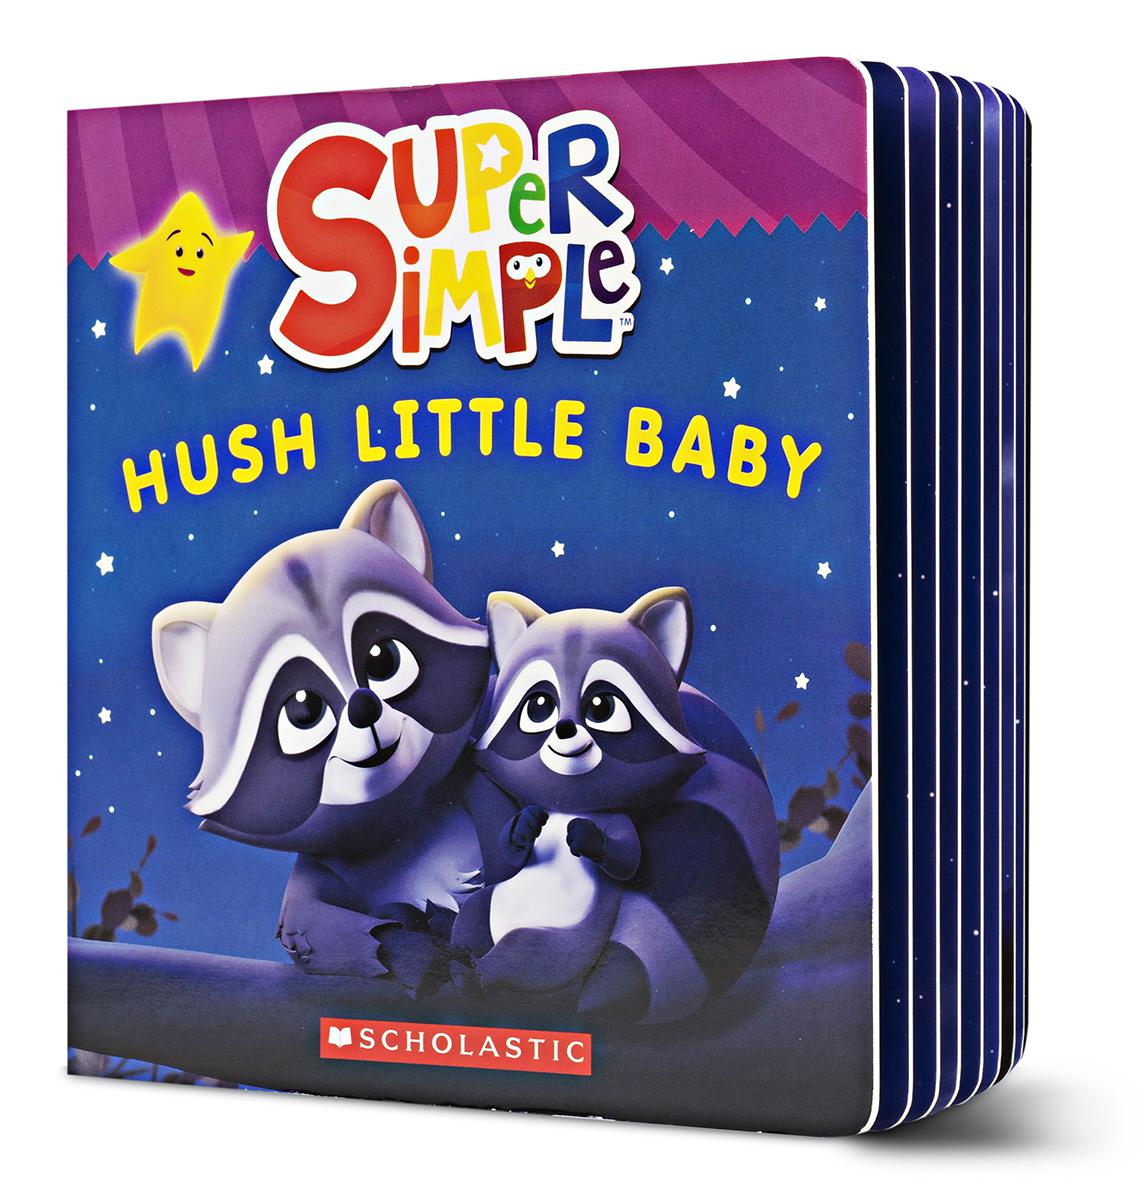  Super Simple: Hush Little Baby 